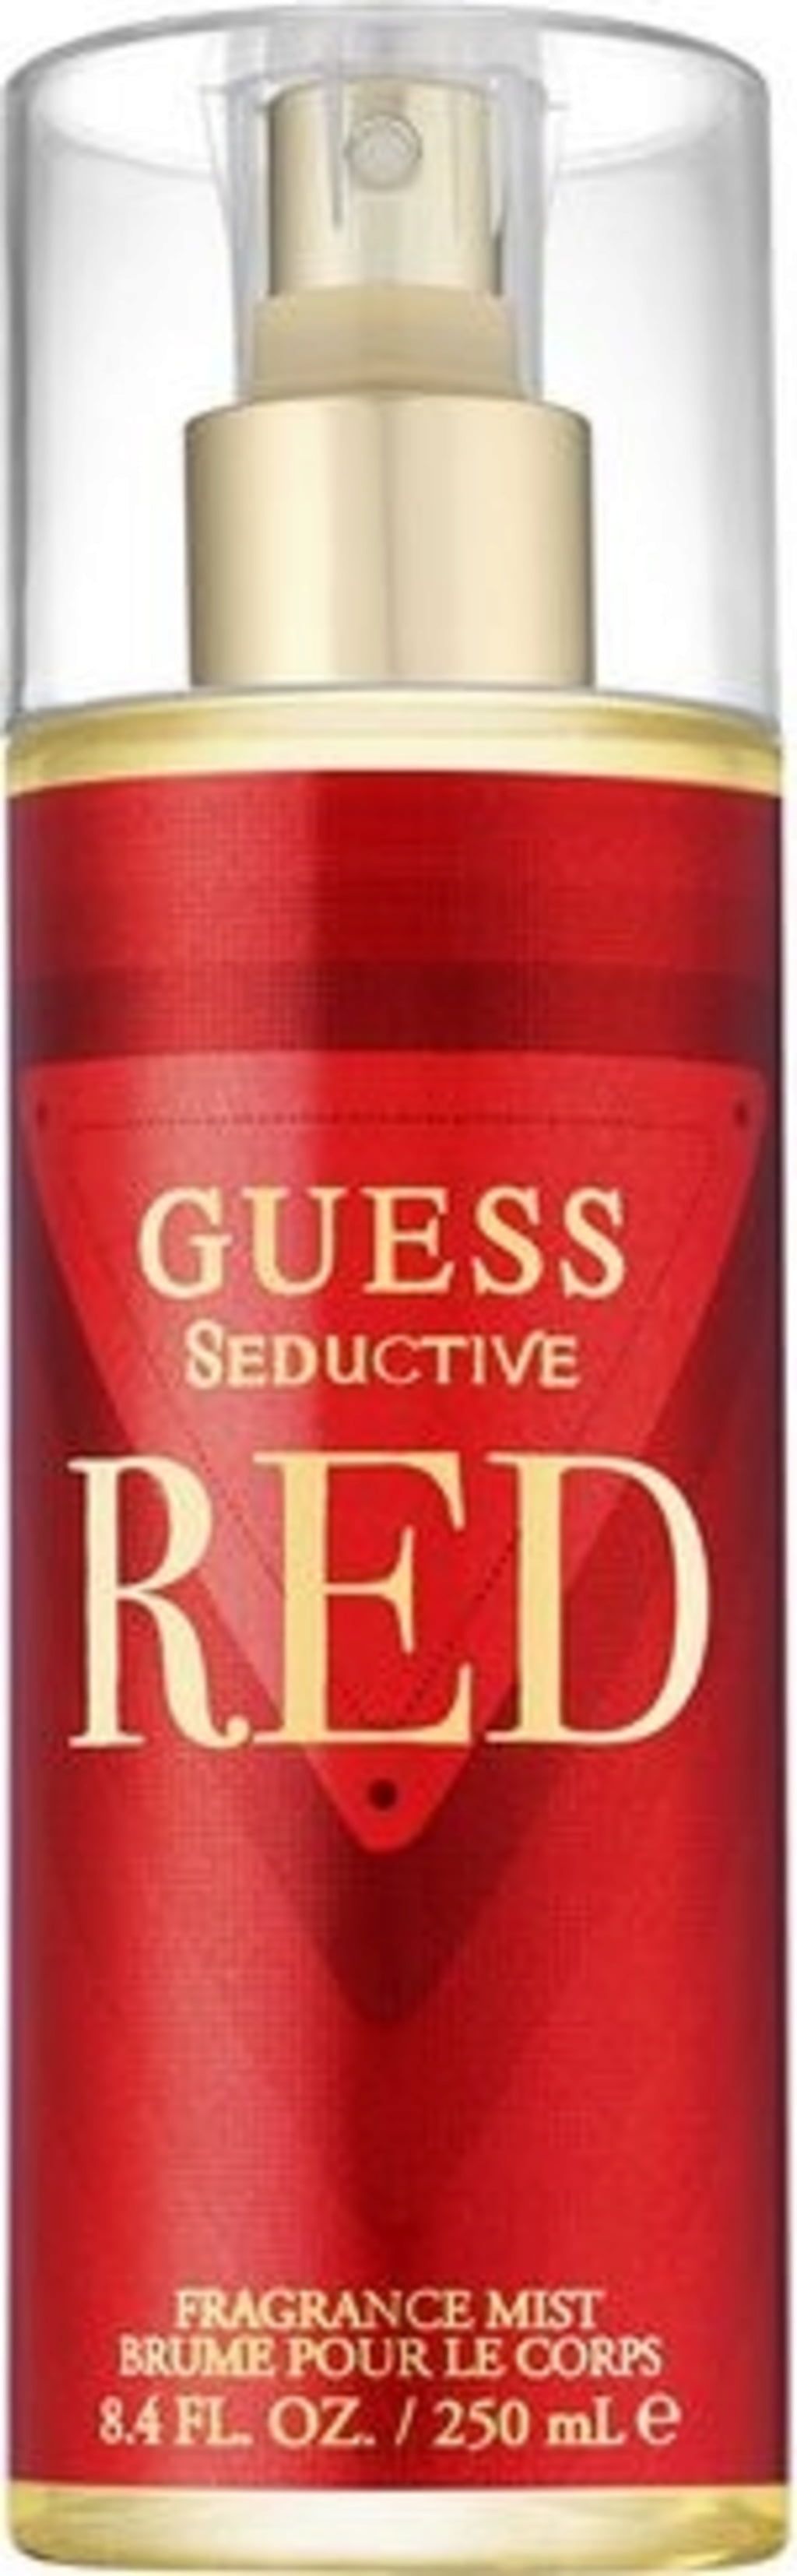 Guess Seductive Red for Women Body Mist, 250 ml - oh feliz